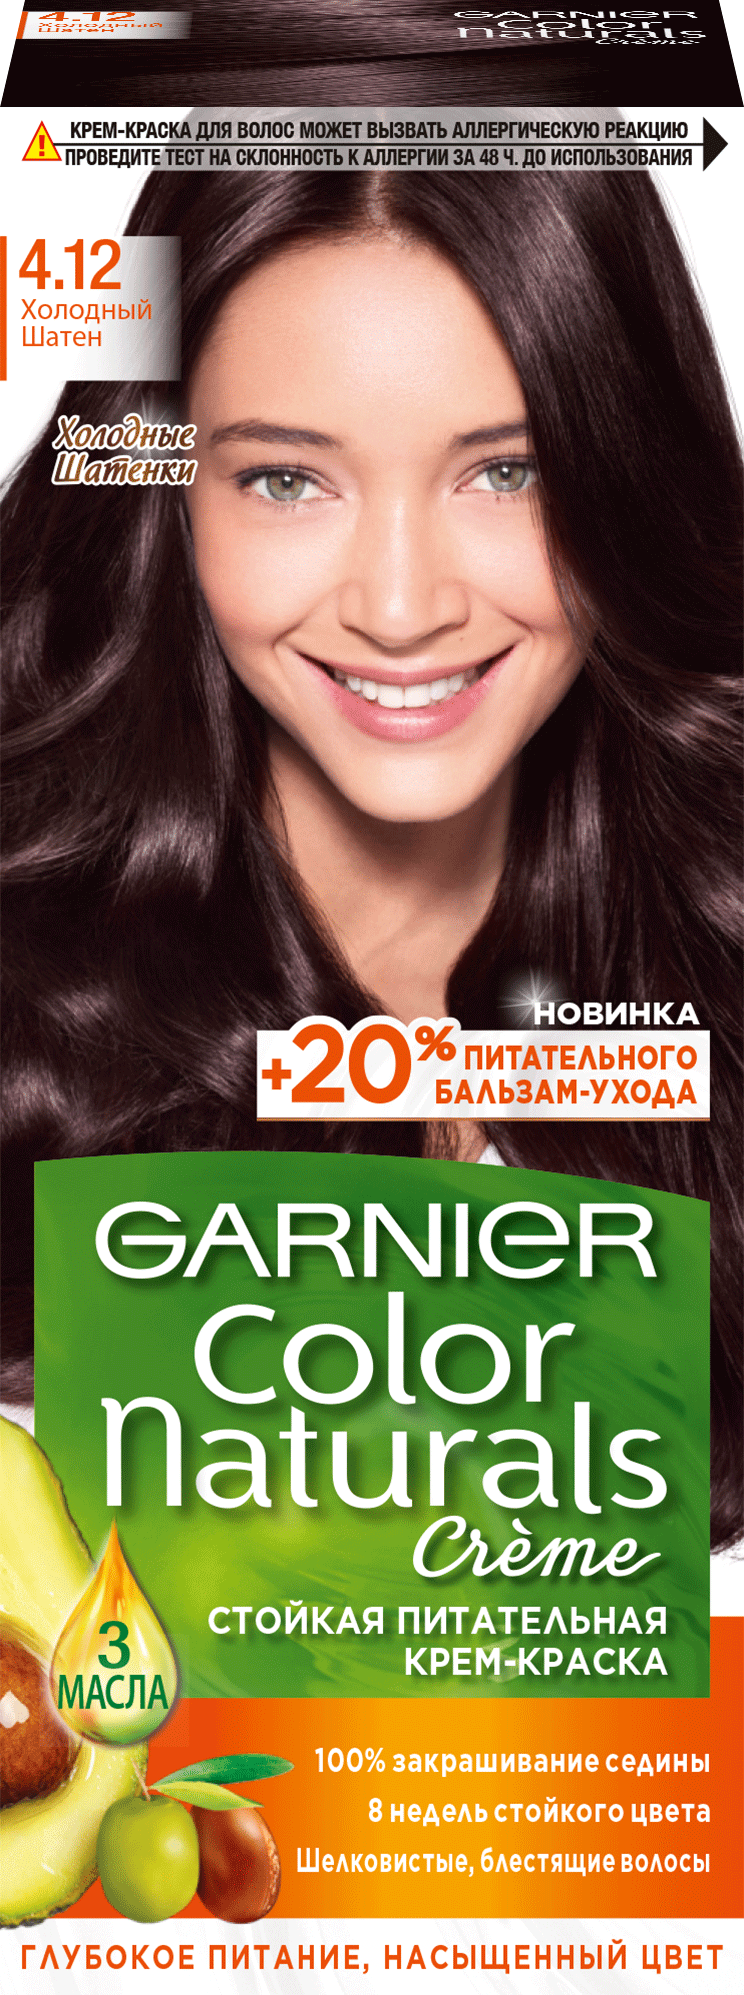 Тон краски garnier. Краска Garnier Color naturals 5,12. Краска Garnier Color naturals 4.12. Garnier Color naturals краска для волос, 4.12. Garnier Color naturals 4.12 холодный шатен.